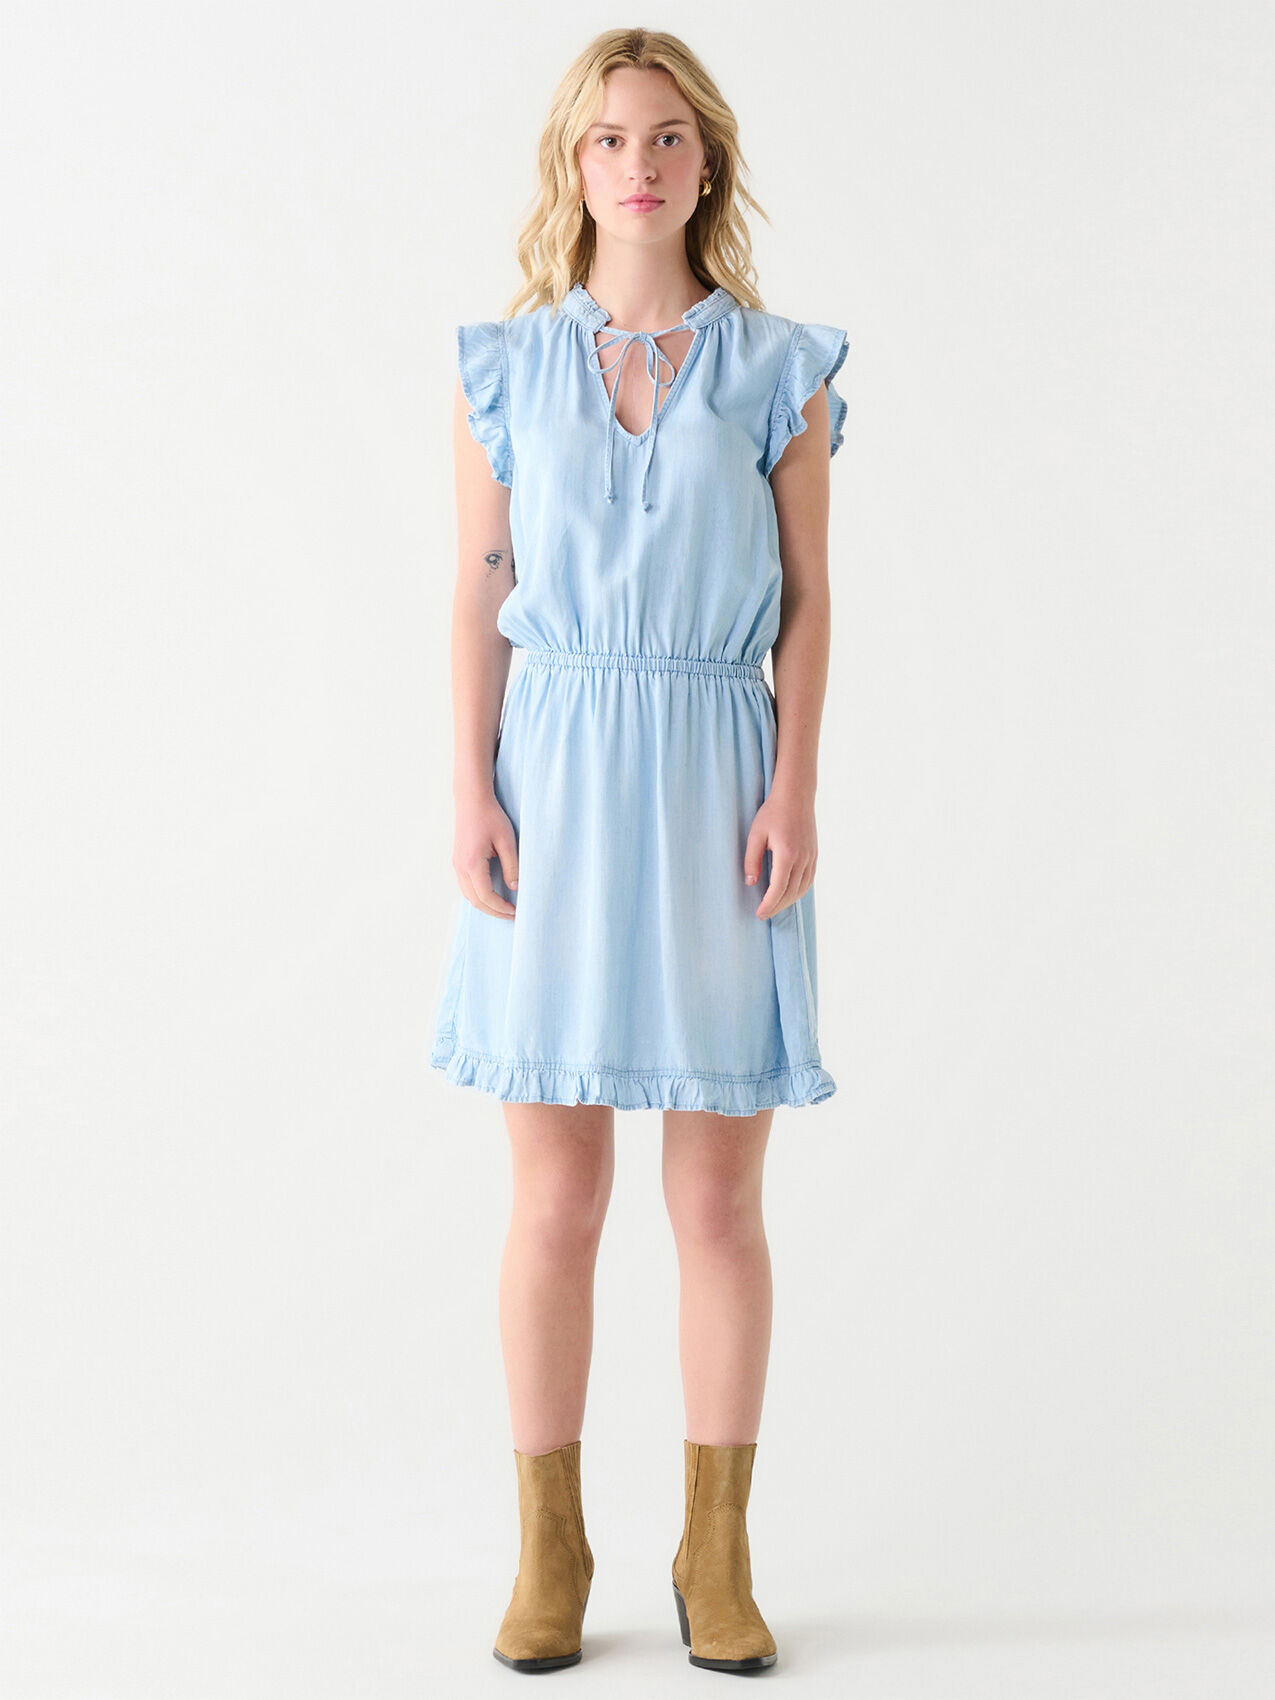 Sleeveless Ruffle Trim Mini Dress by Dex